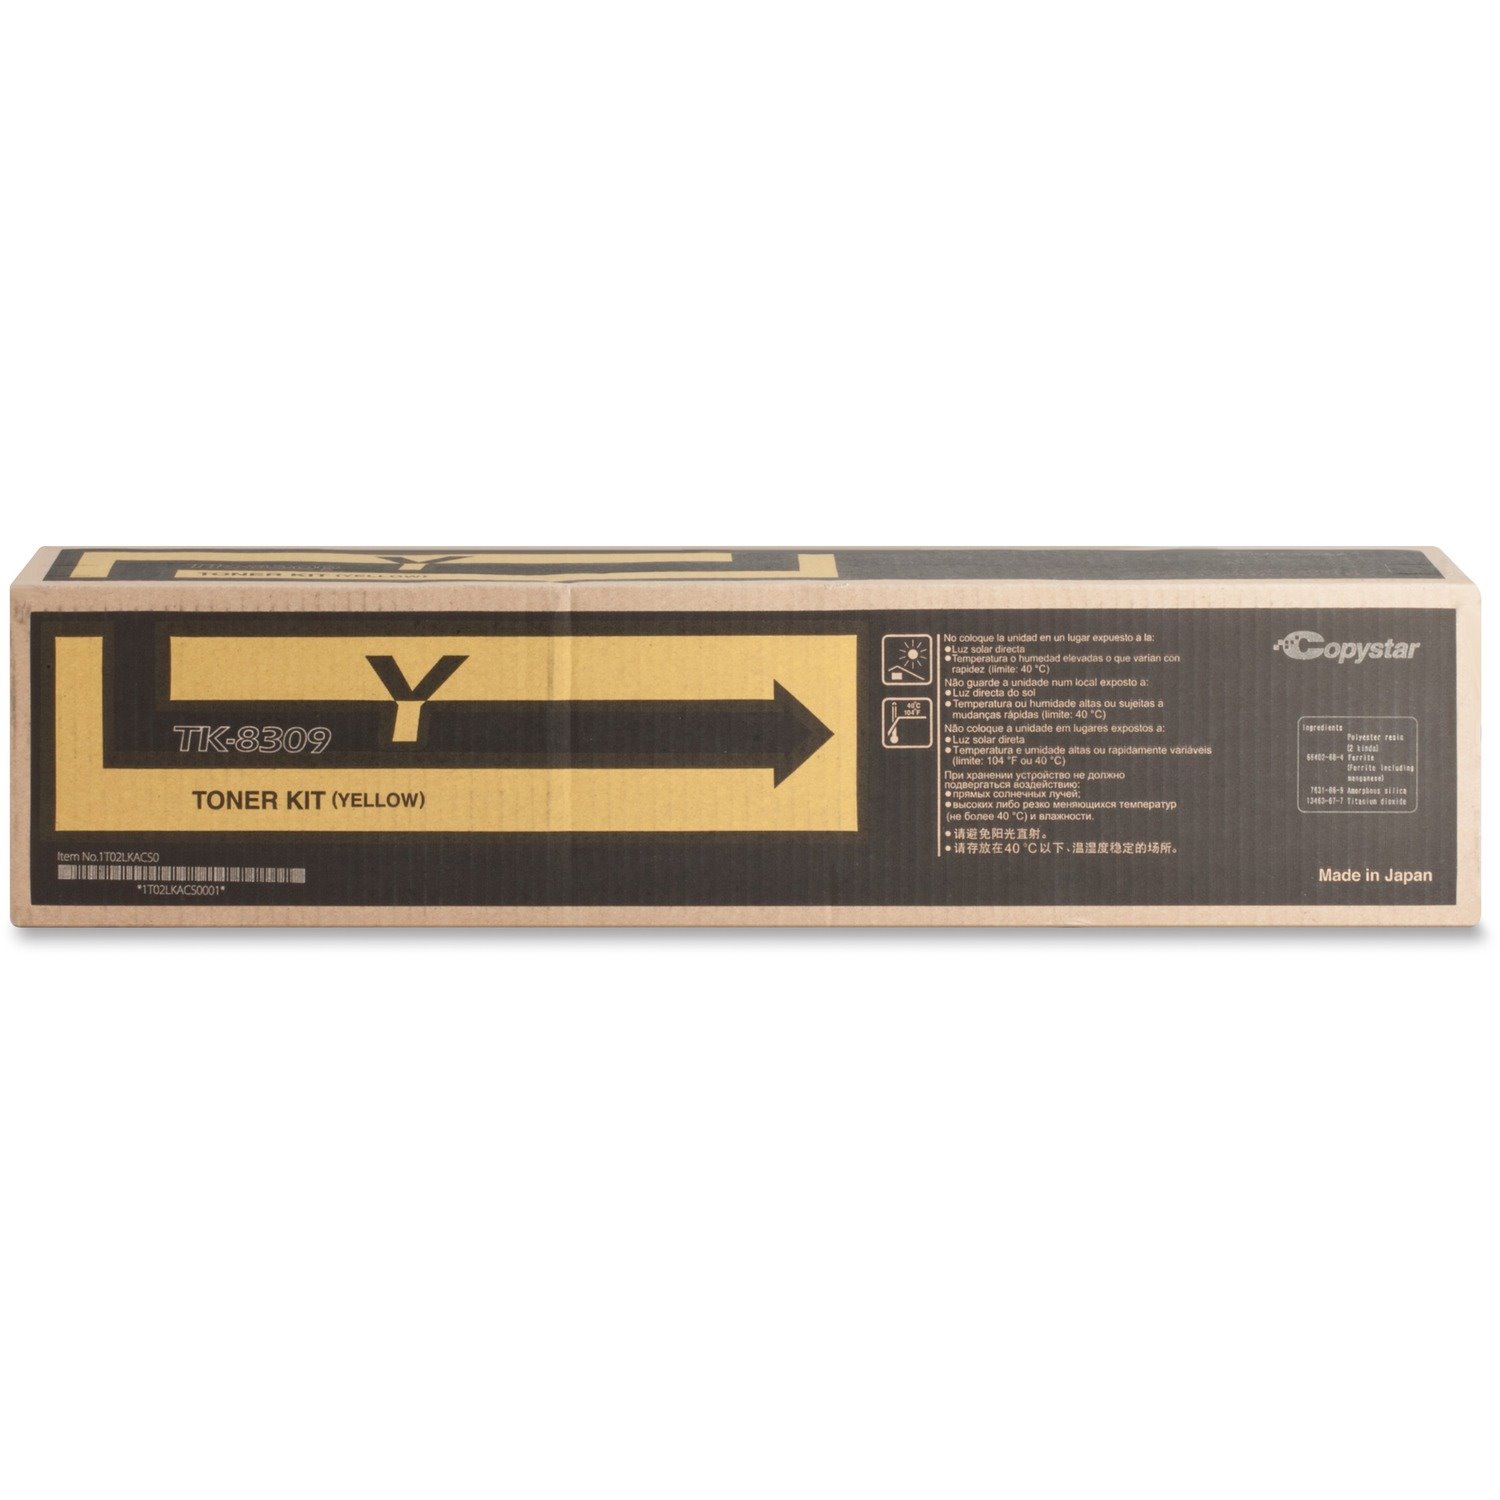 Kyocera Original Toner Cartridge - Yellow